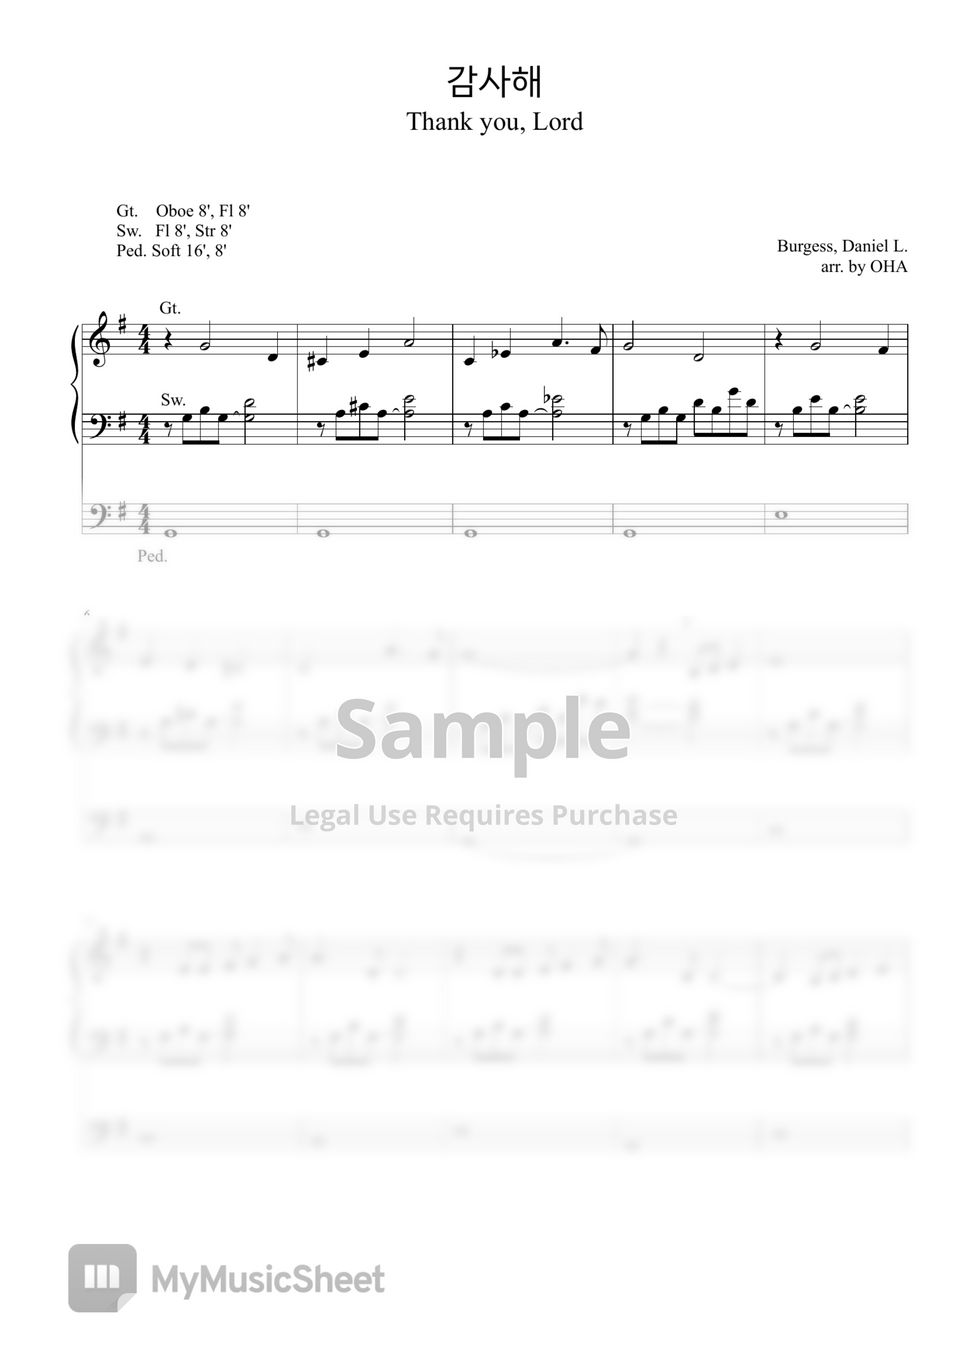 Daniel L. Burgess - Thank you, Lord (Organ Solo) by OHA